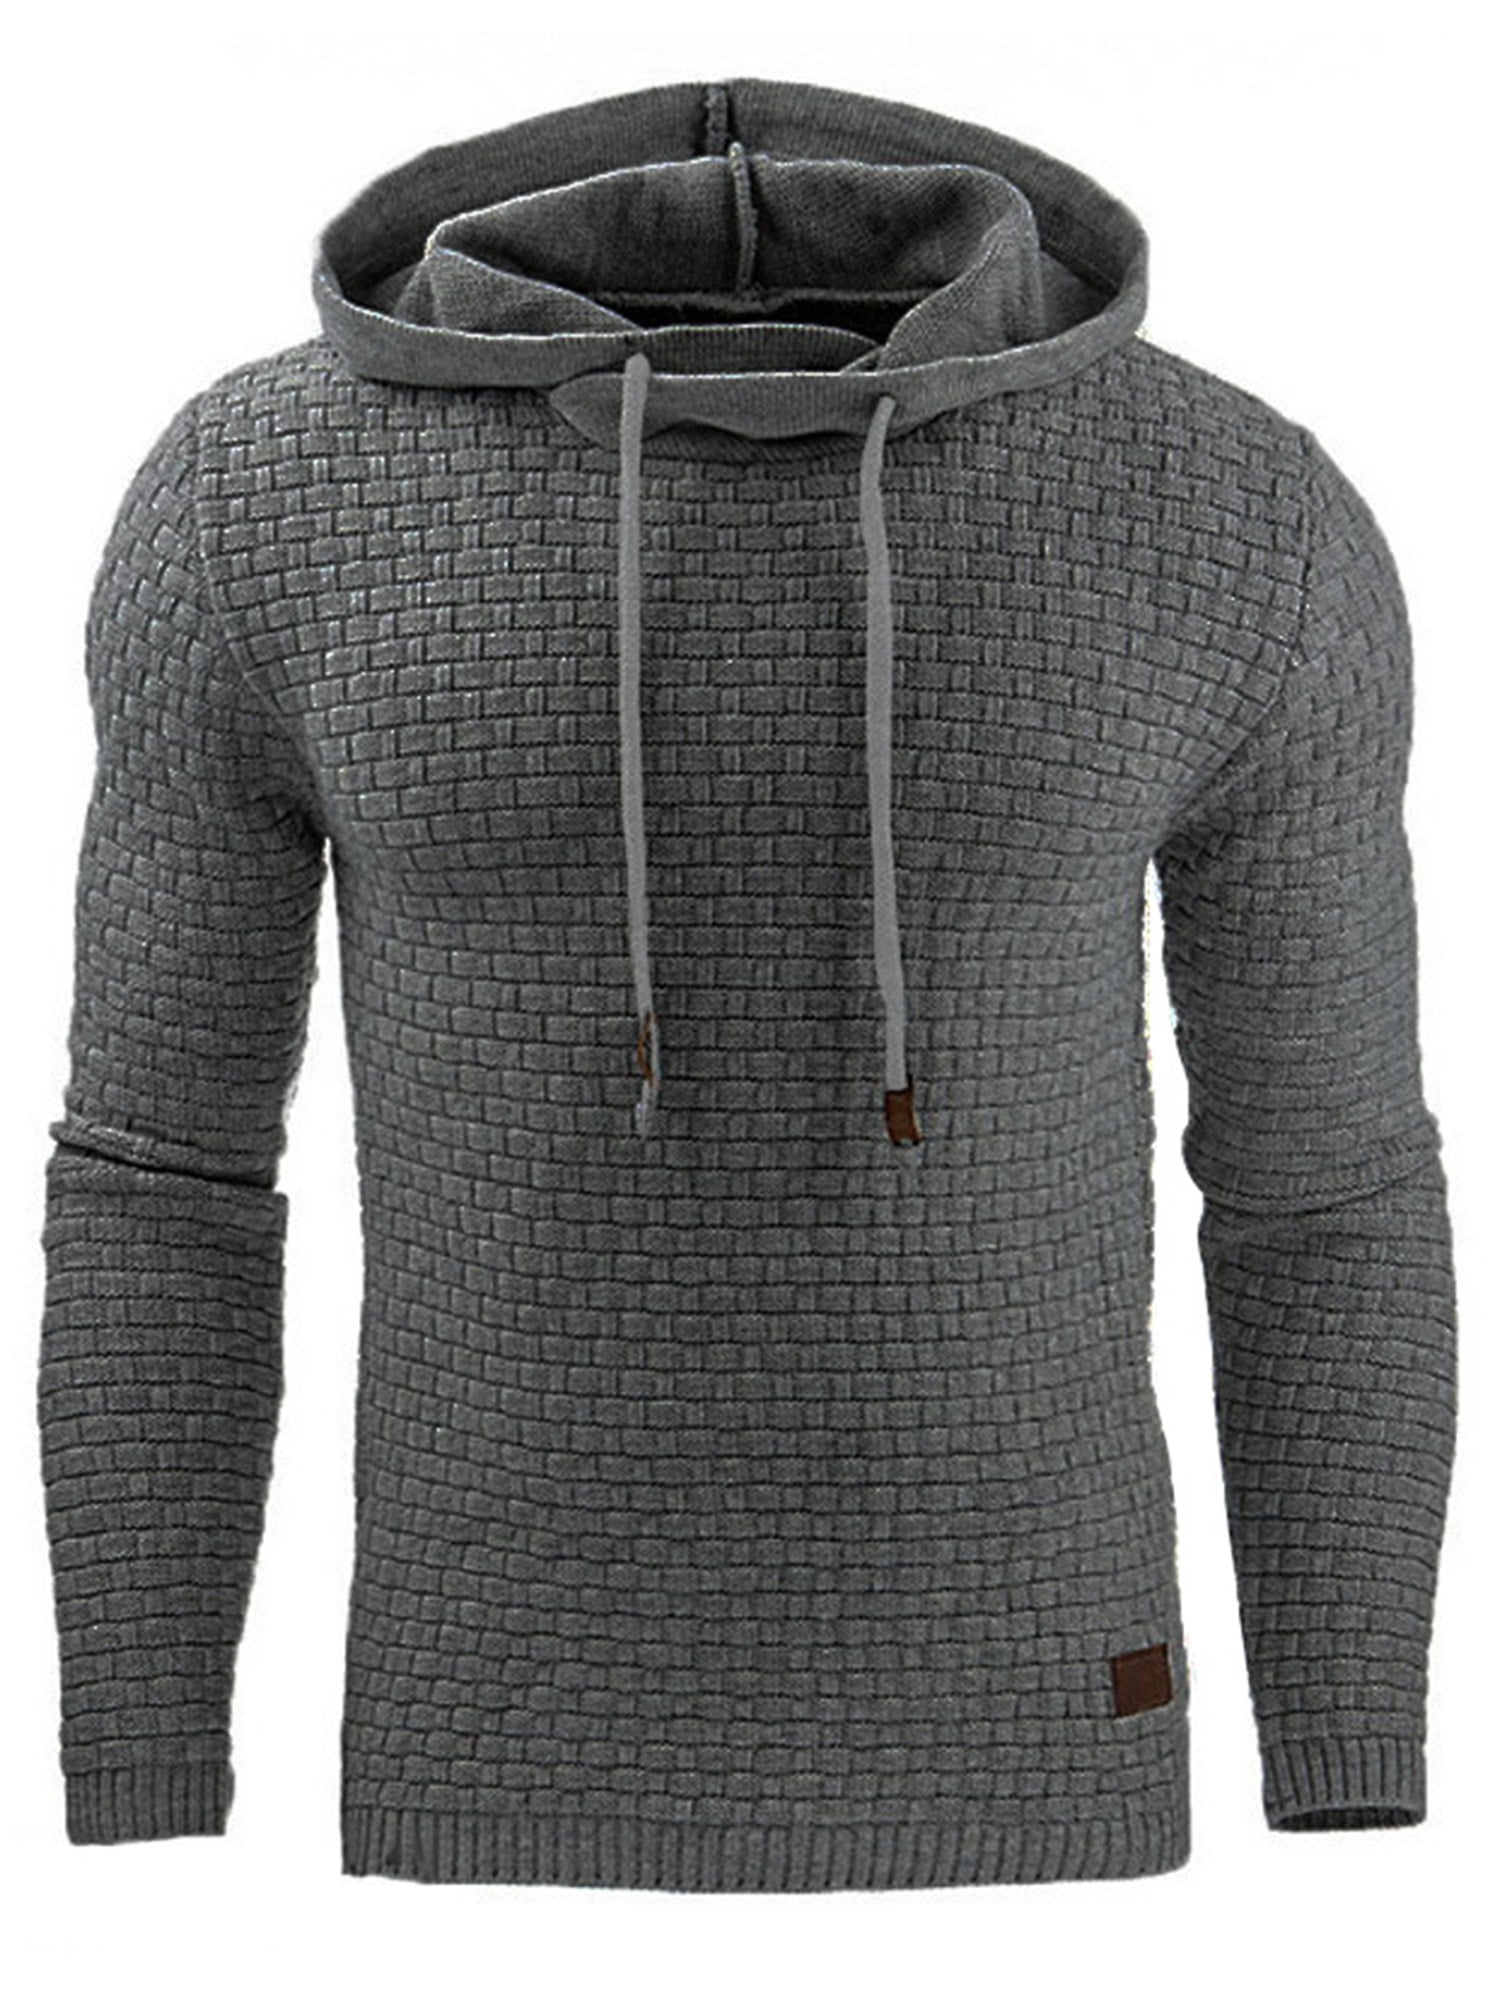 Mens Casual Long Sleeve Hoodies Zip Jacquard Fleece Sweatshirt